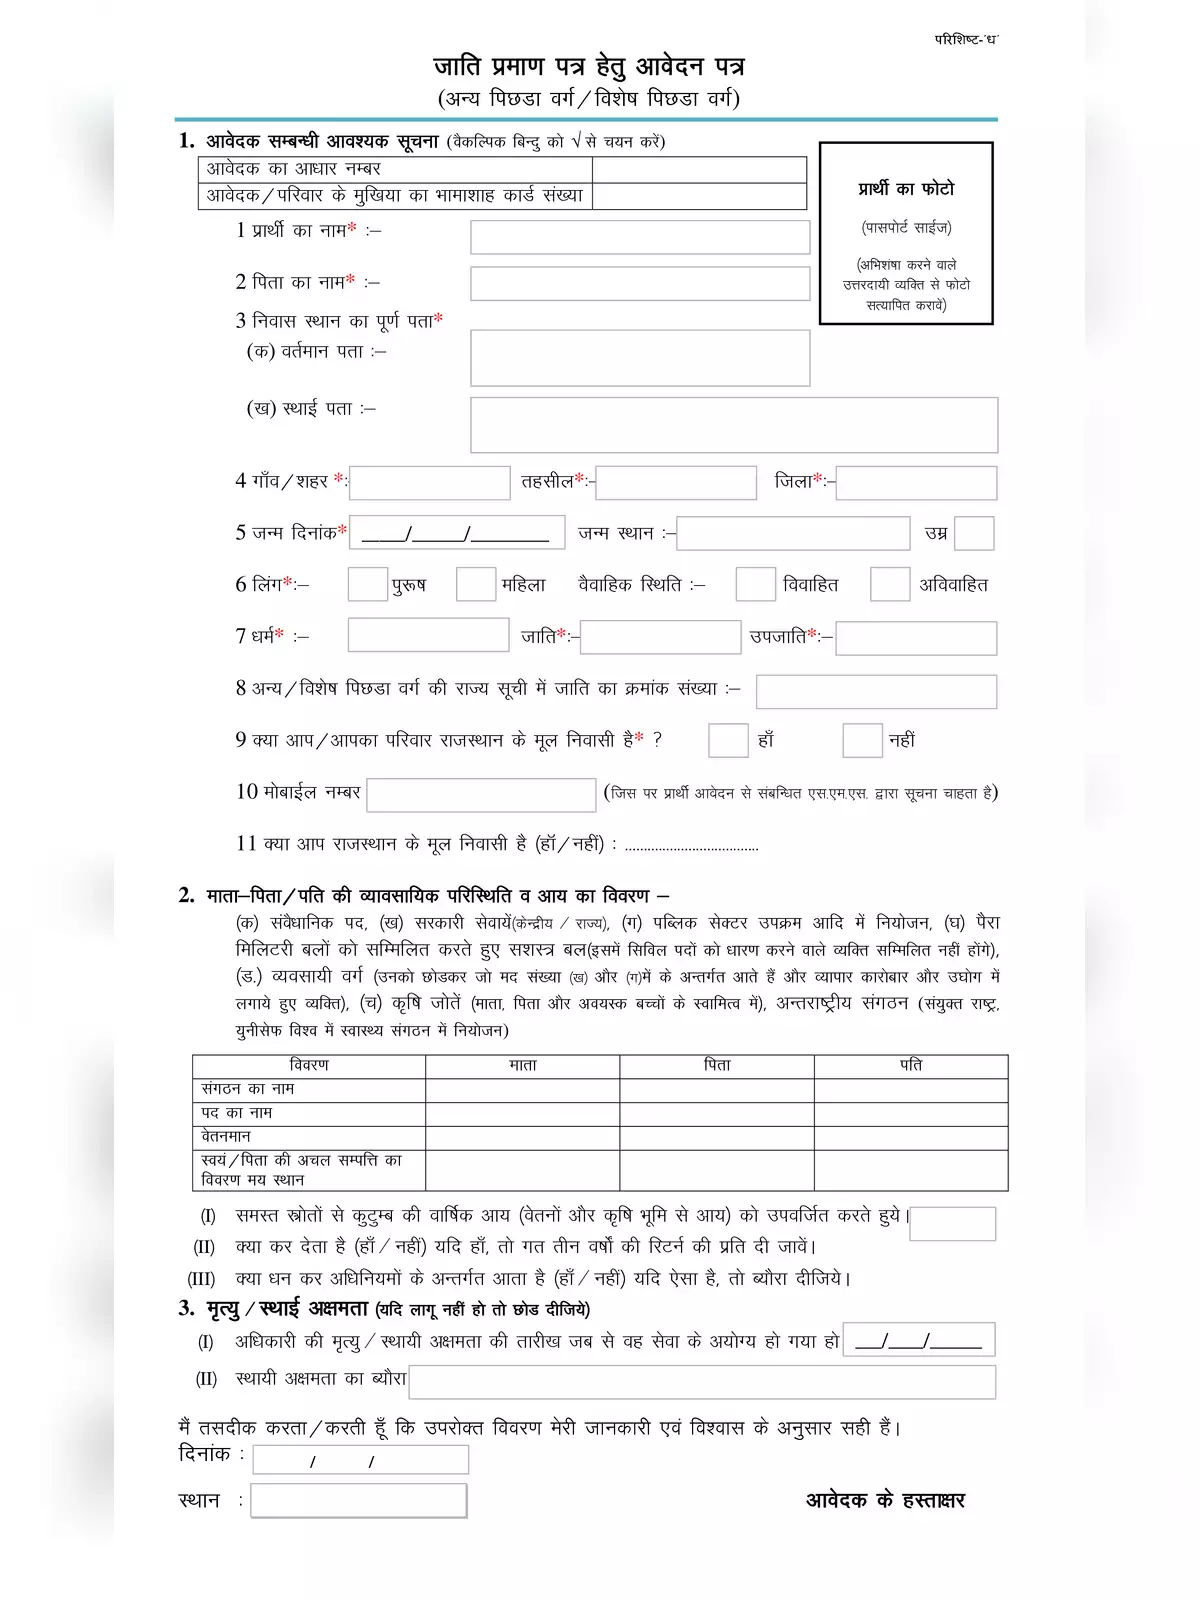 obc-caste-certificate-form-rajasthan-pdf